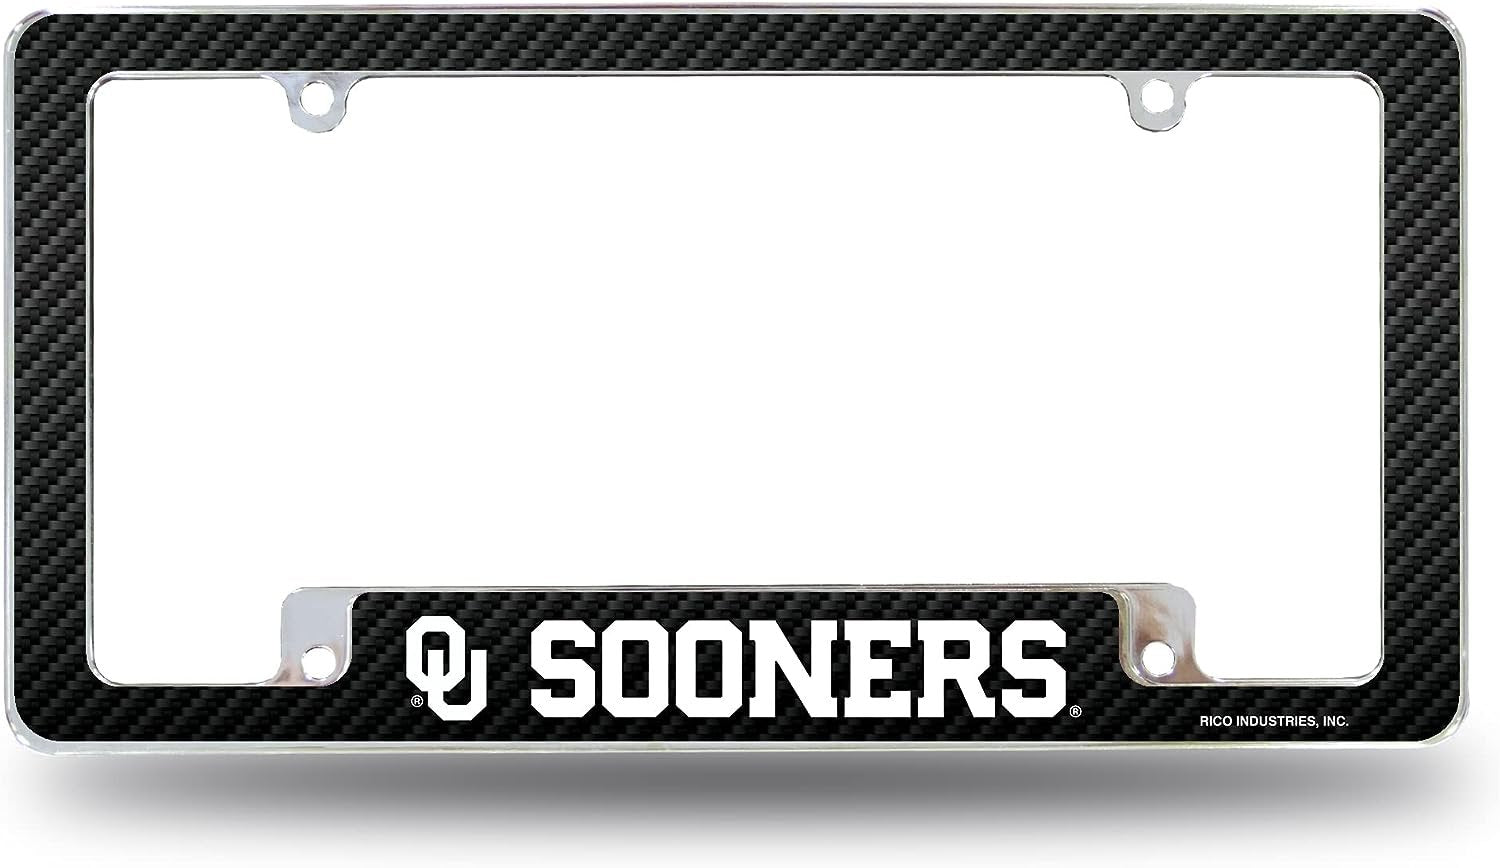 University of Oklahoma Sooners Metal License Plate Frame Chrome Tag Cover 12x6 Inch Carbon Fiber Design